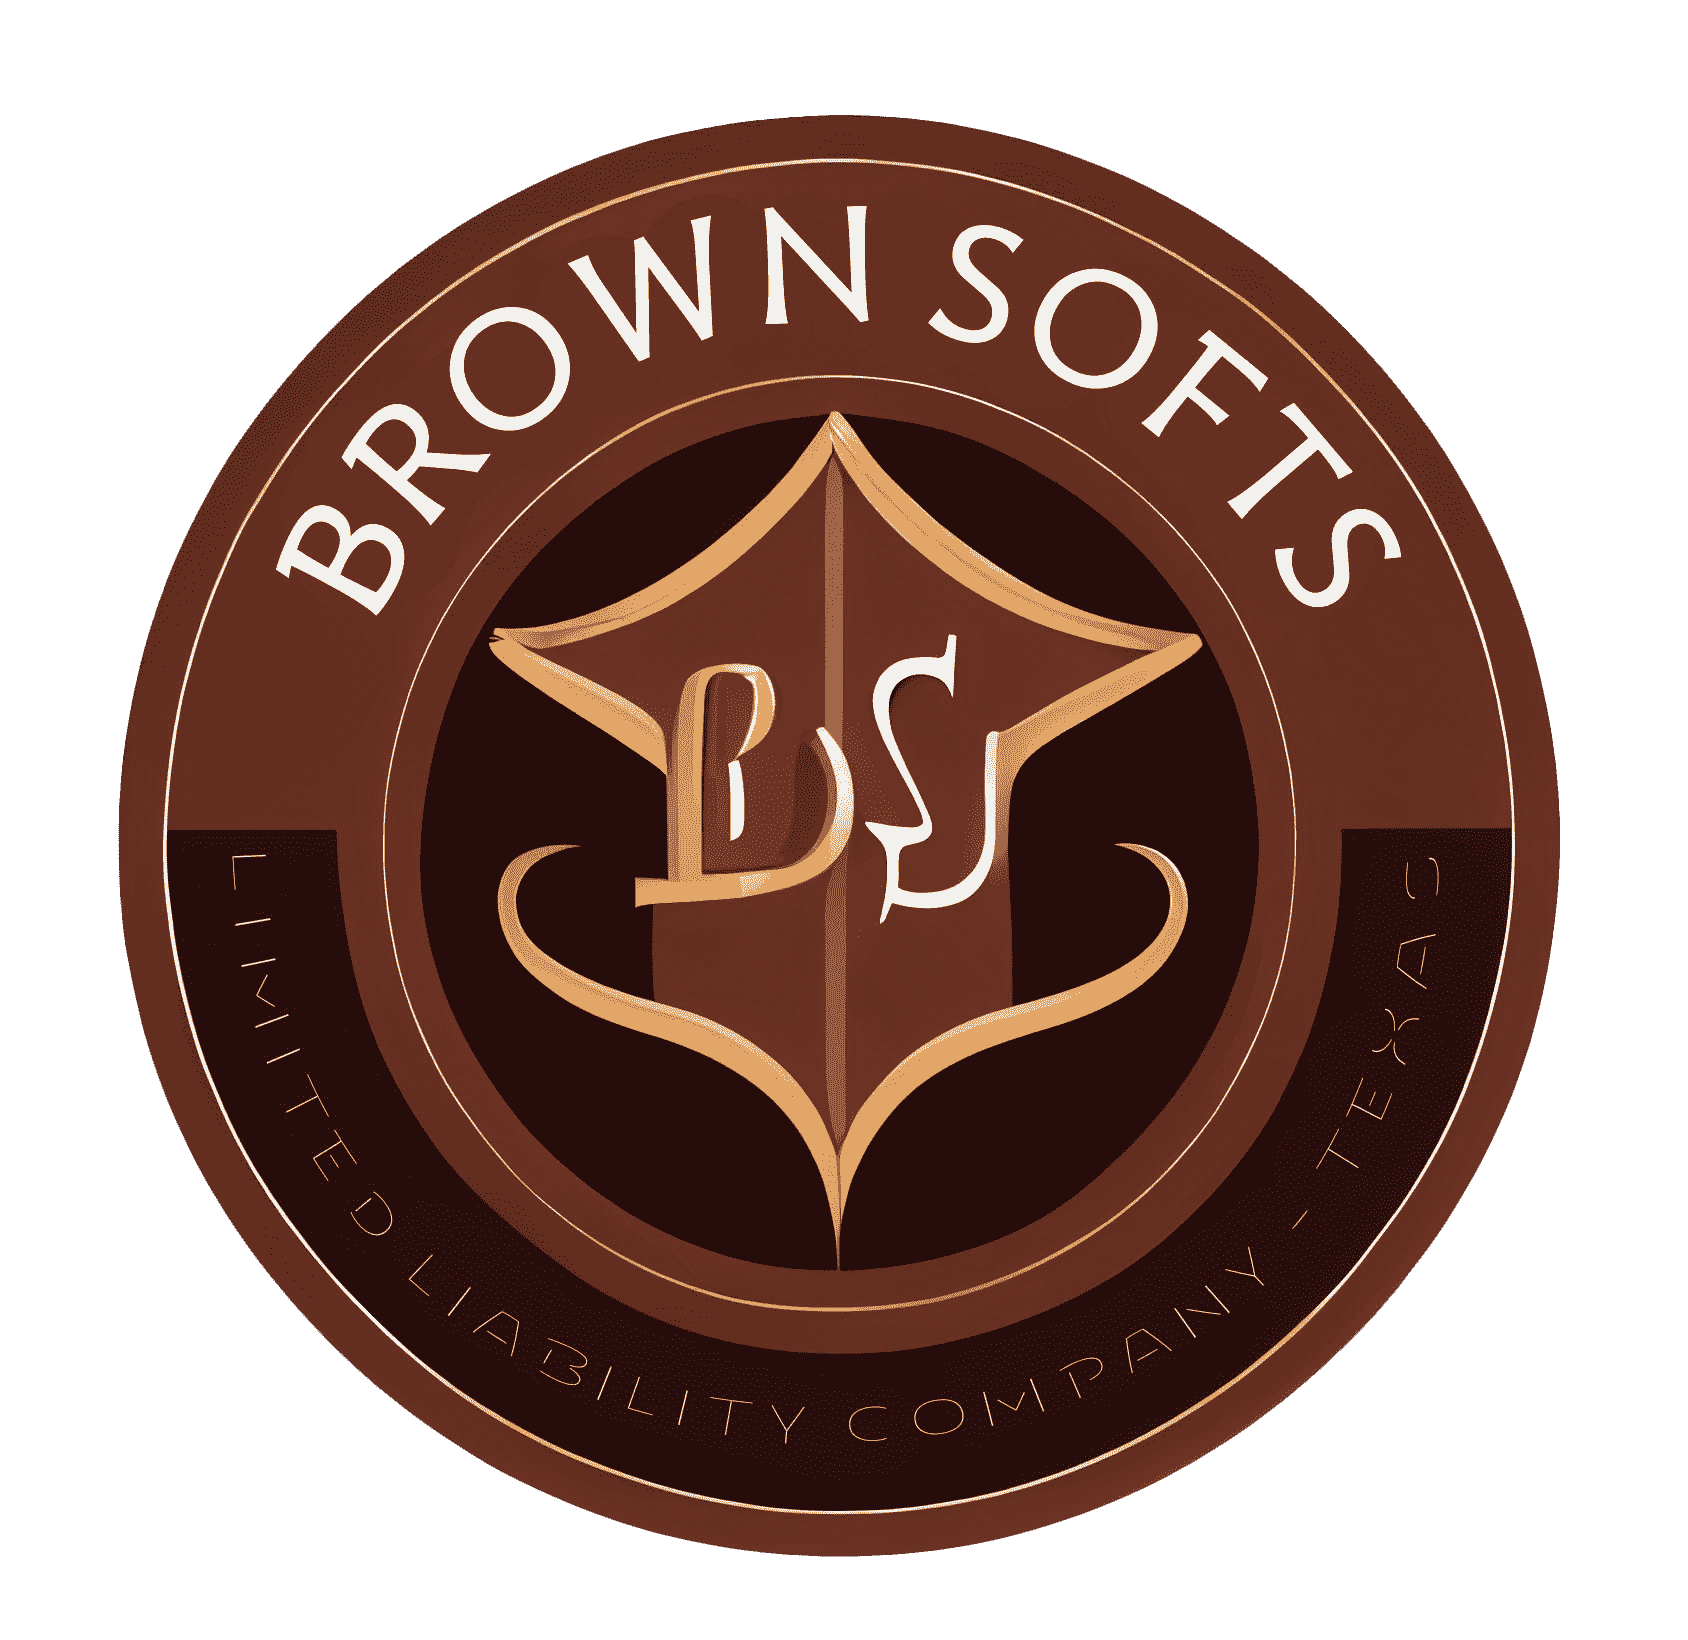 Brownsofts LLC Digital Services Company